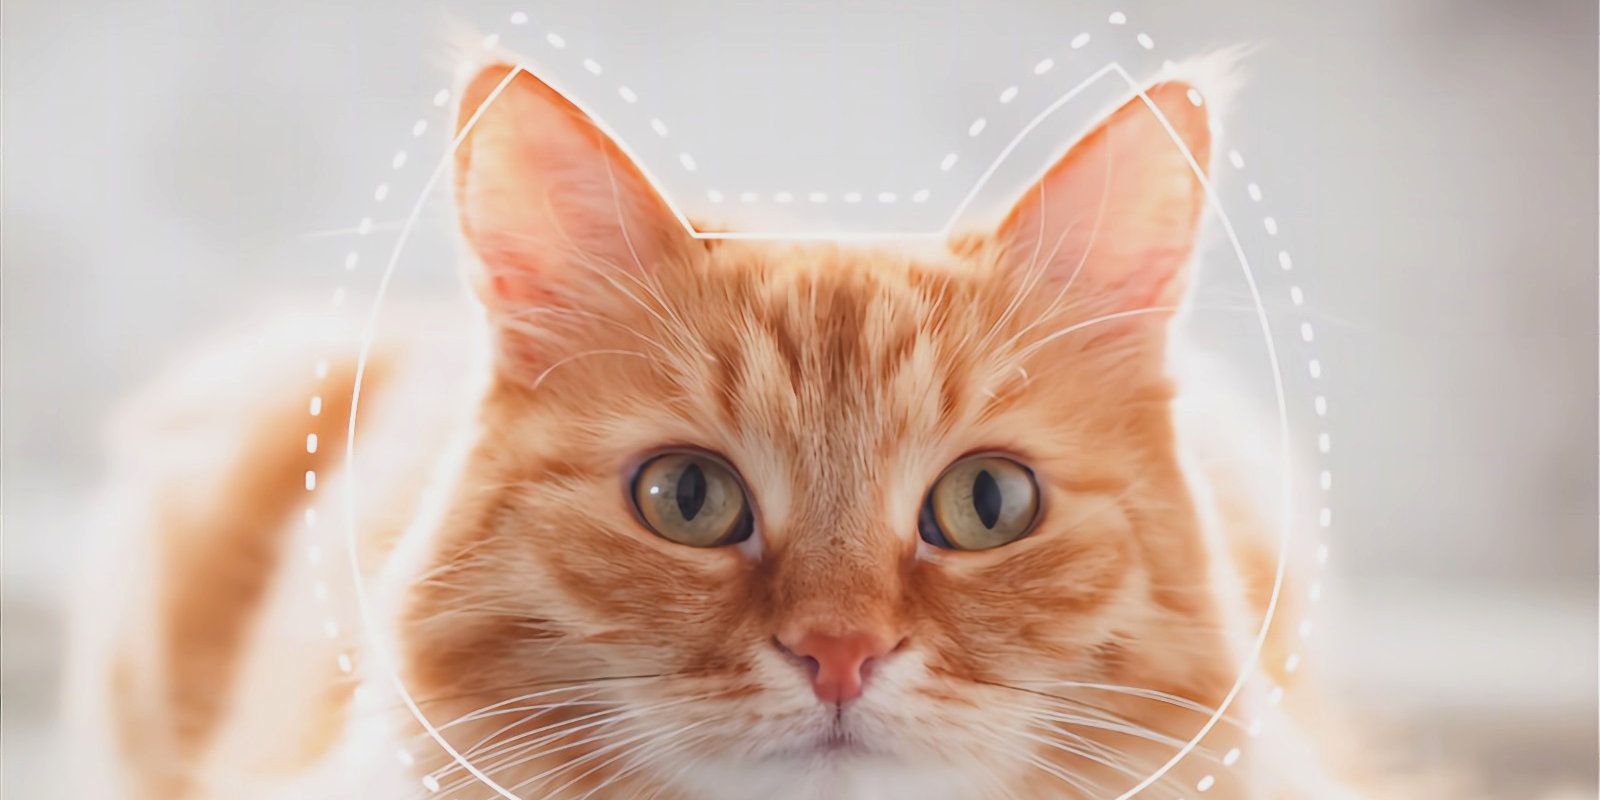 Feline Grimace Scale Tably App Detect Pain